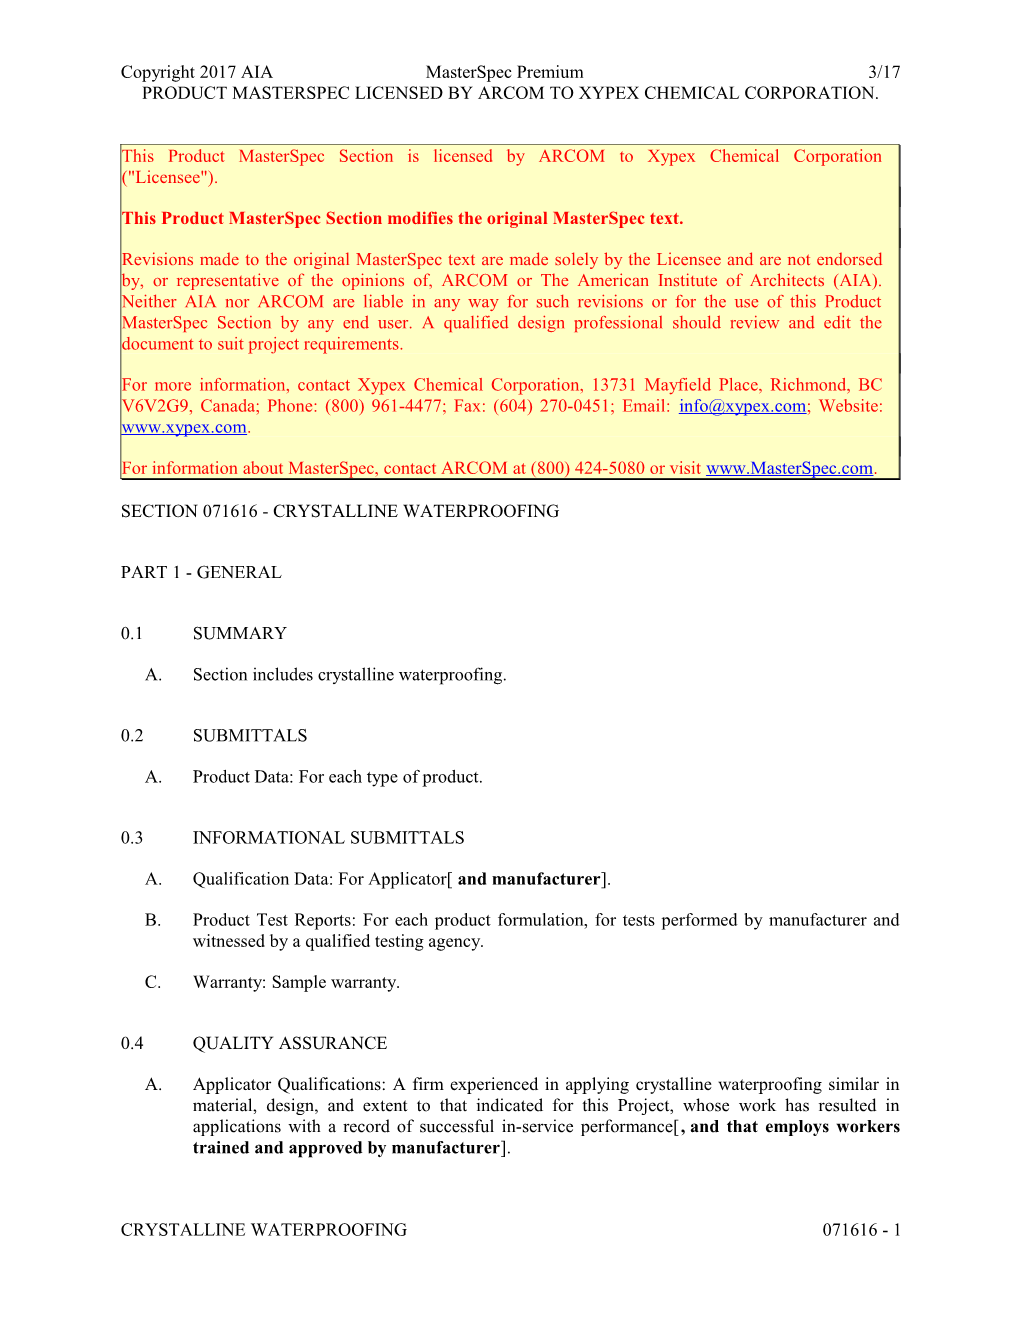 Section 071616 - Crystalline Waterproofing